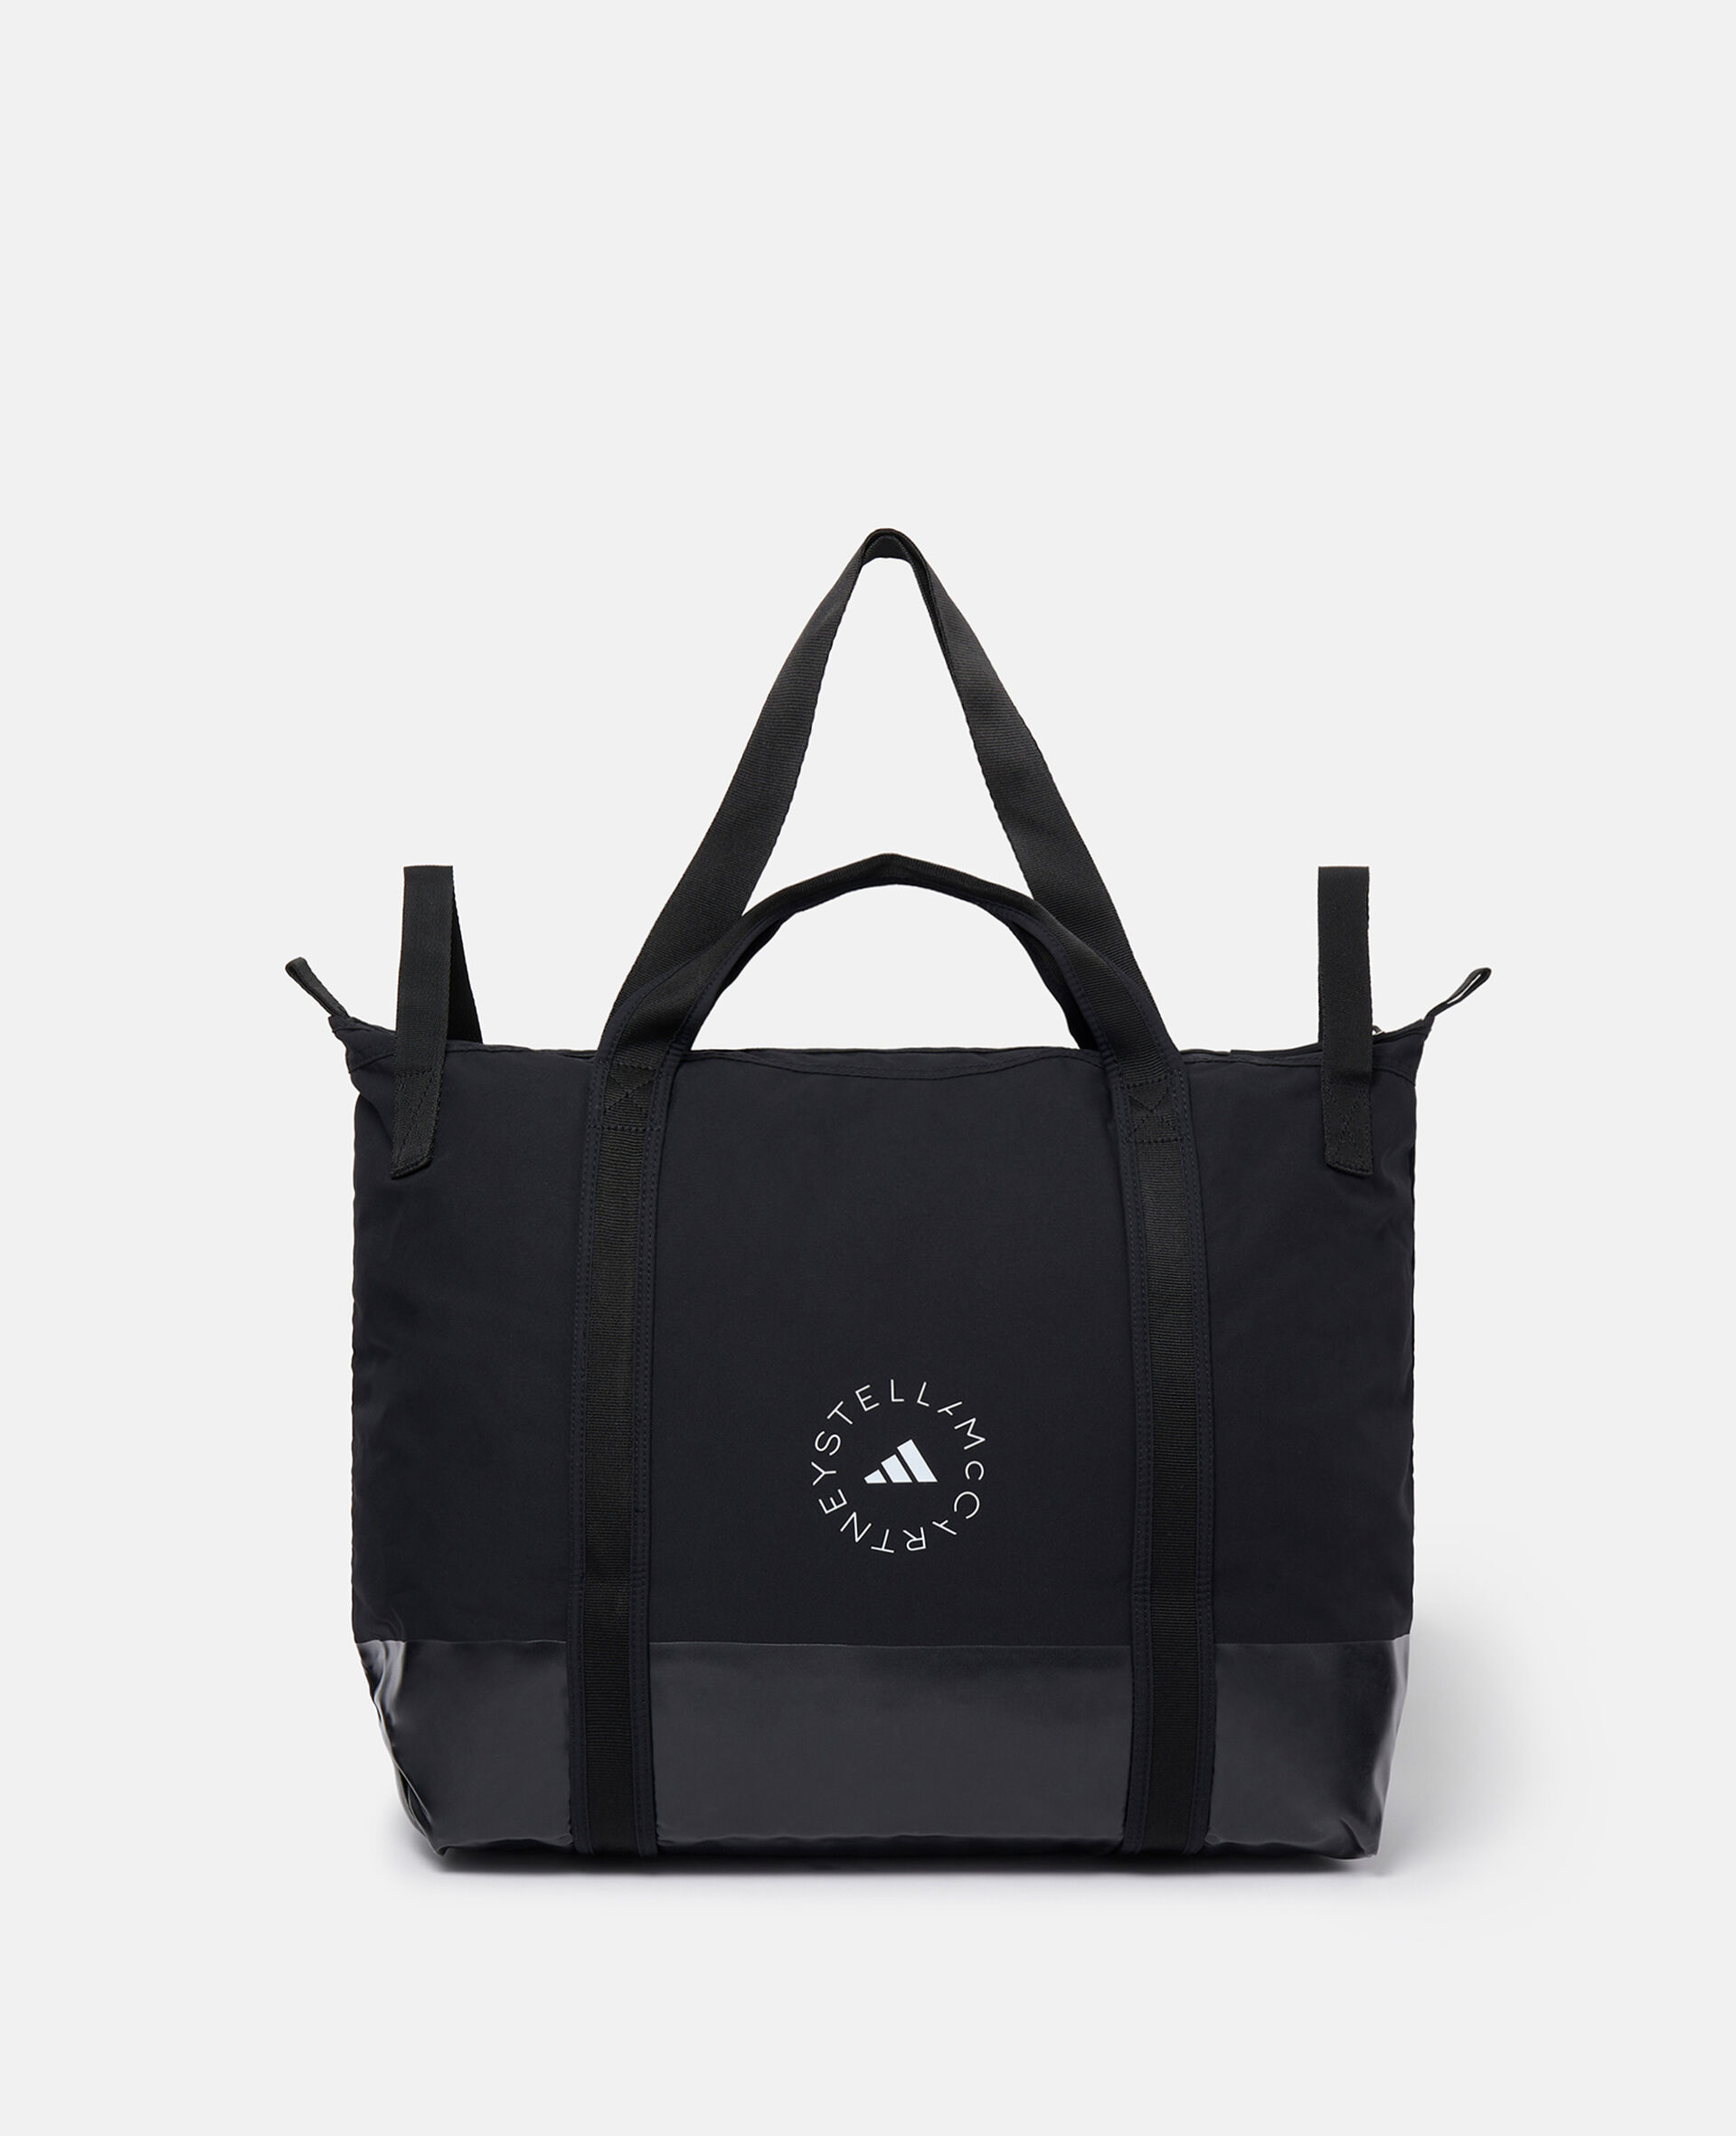 Stella Mcartney For ADIDAS Duffel Bag Yoga Weekender Tote Bag